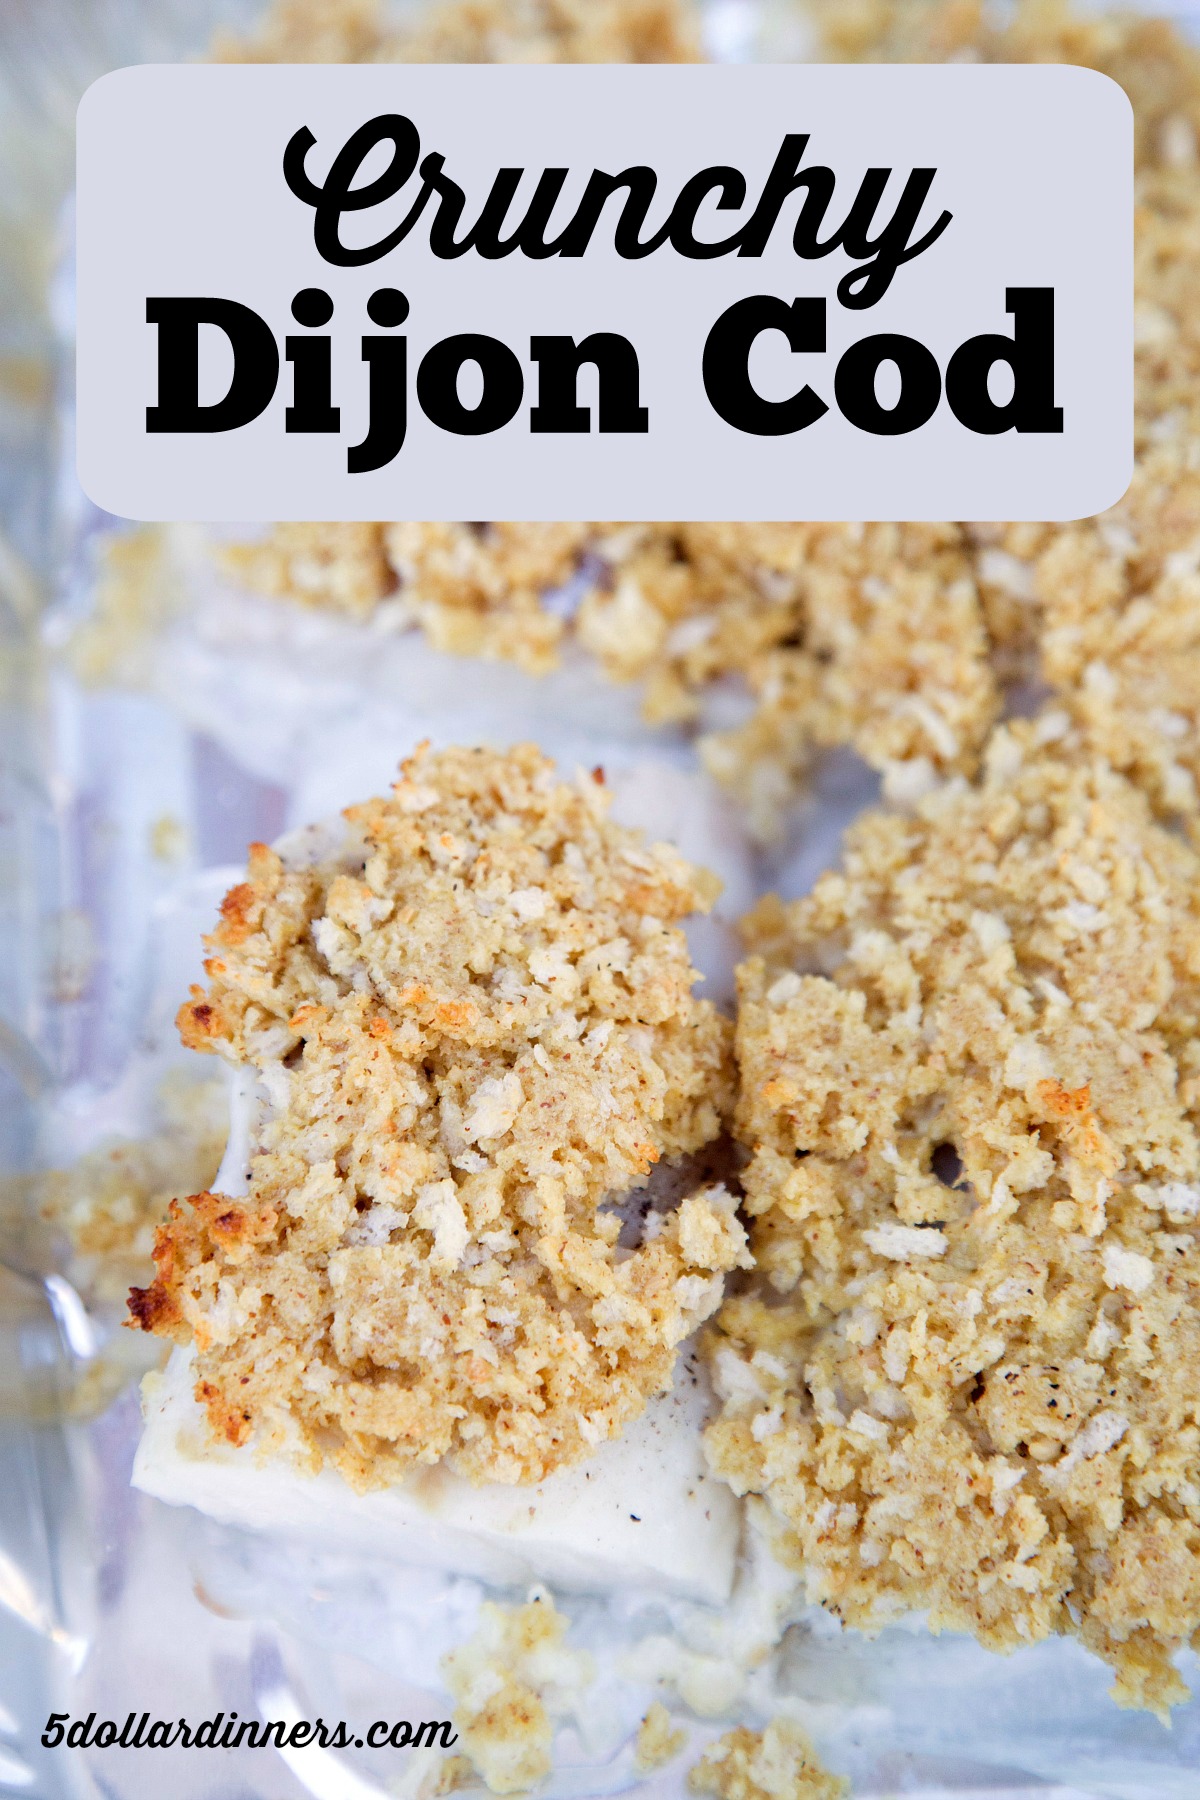 Crunchy Dijon Cod